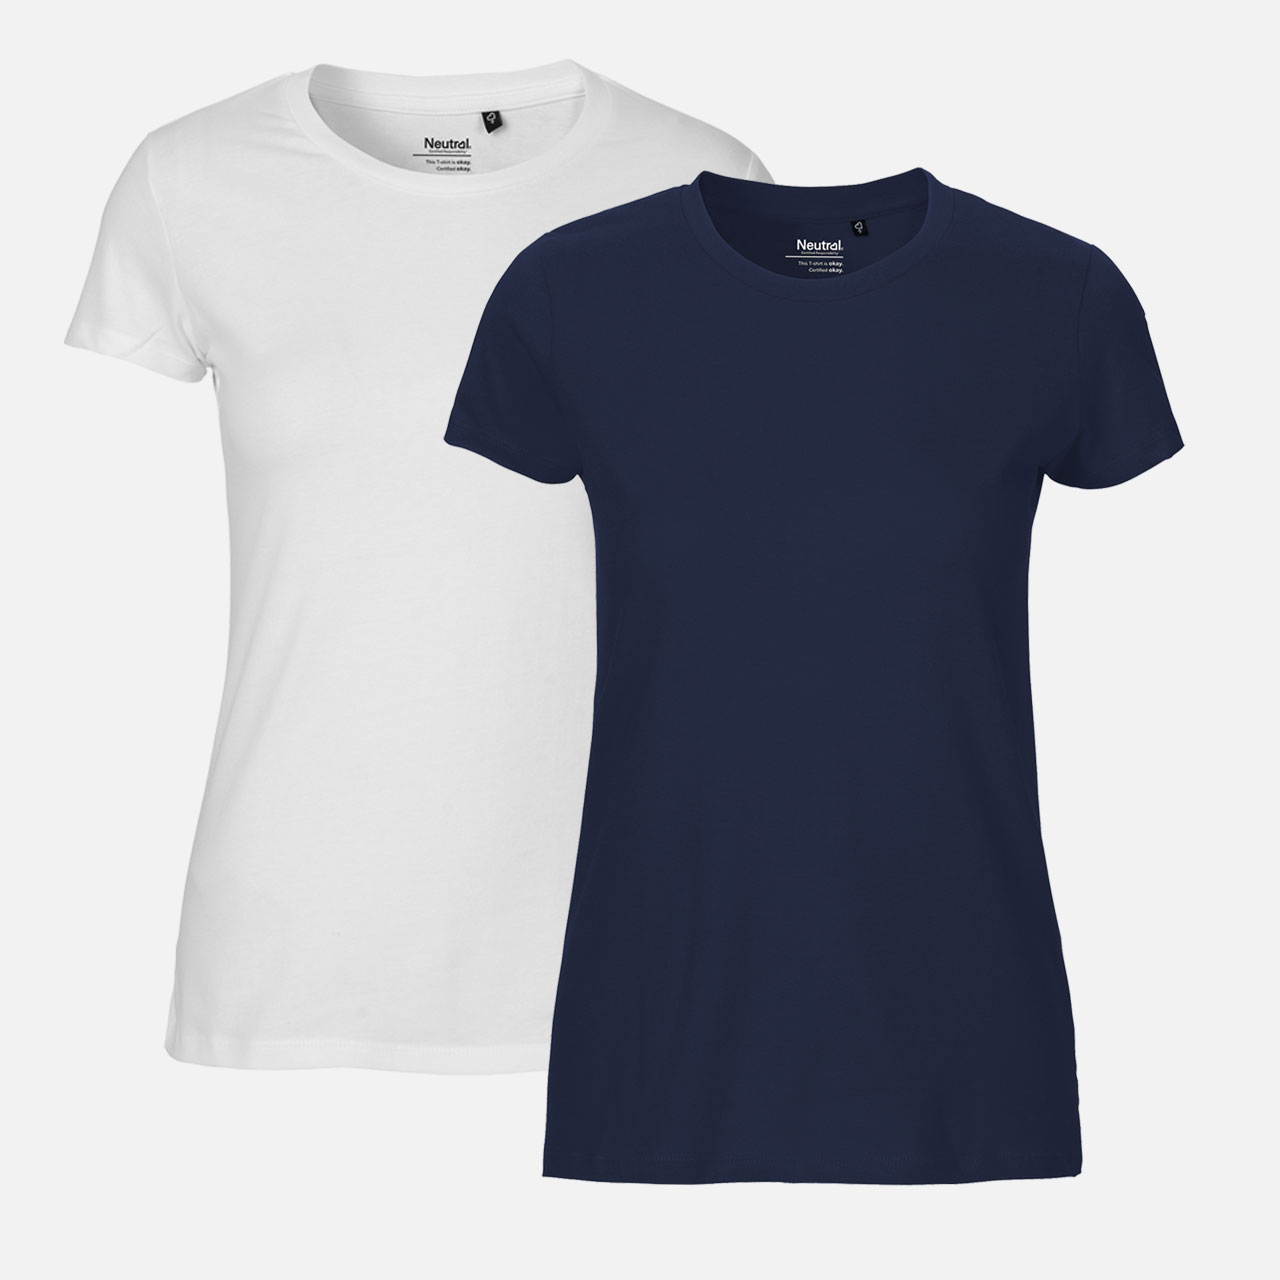 Doppelpack Neutral® Ladies Fit T-Shirt - Weiss / Navy XL Weiss / Navy